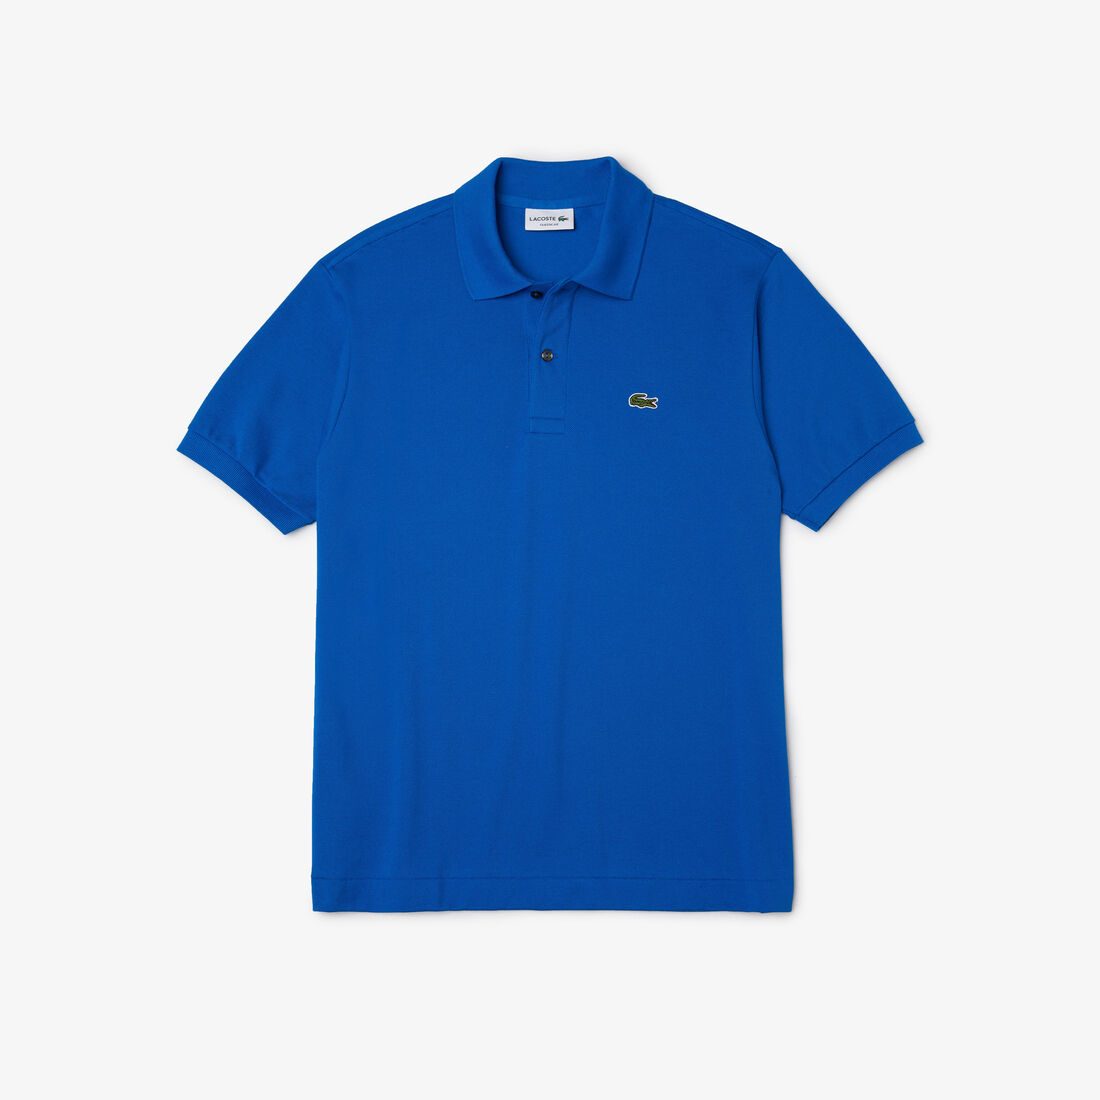 Lacoste Klassische Fit L.12.12 Polo Shirts Herren Blau | GSHB-52613